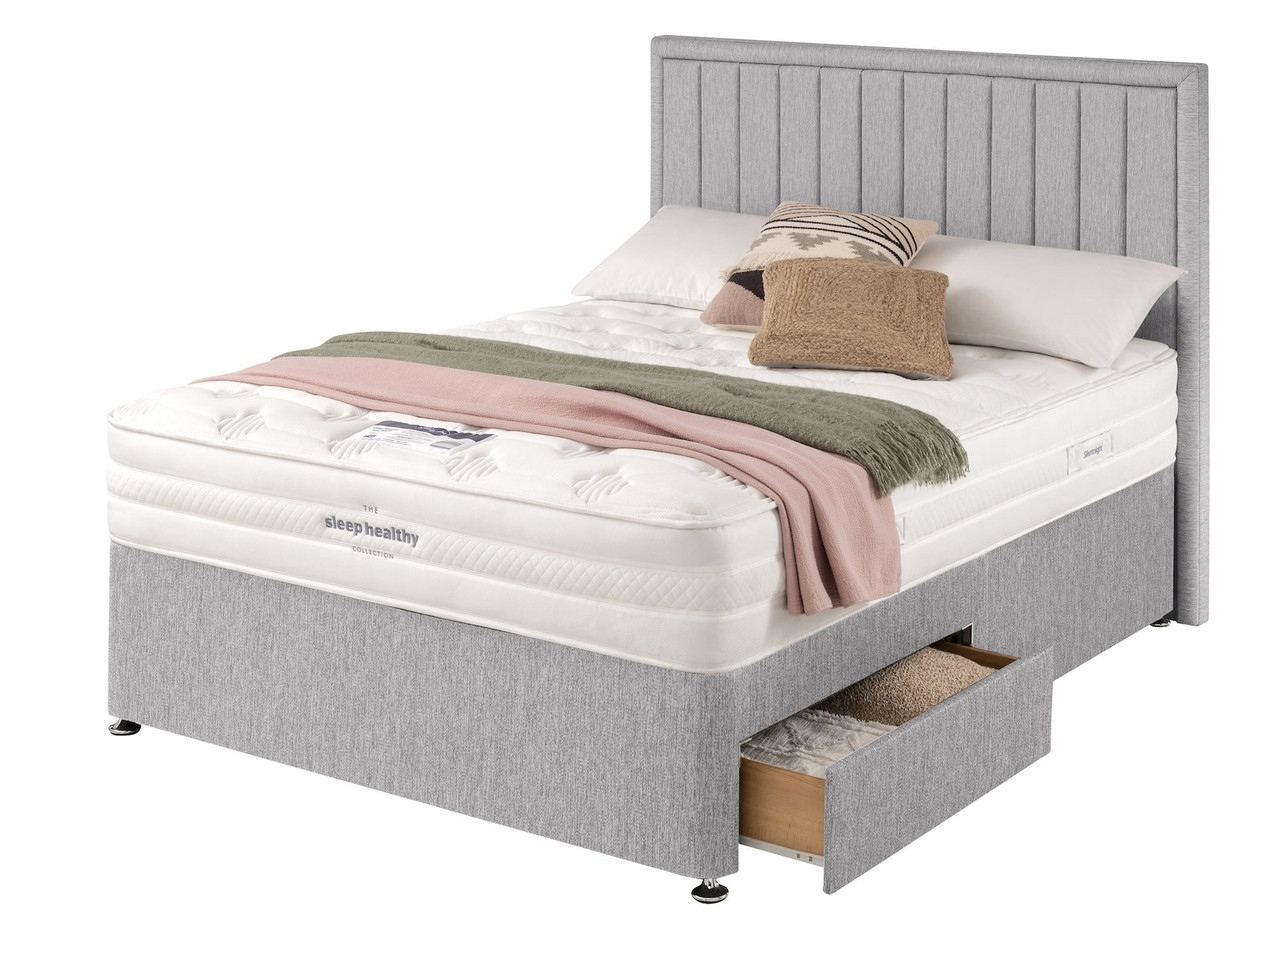 Silentnight Sleep Healthy Eco 2000 Divan Bed Set Single Dolphin Grey